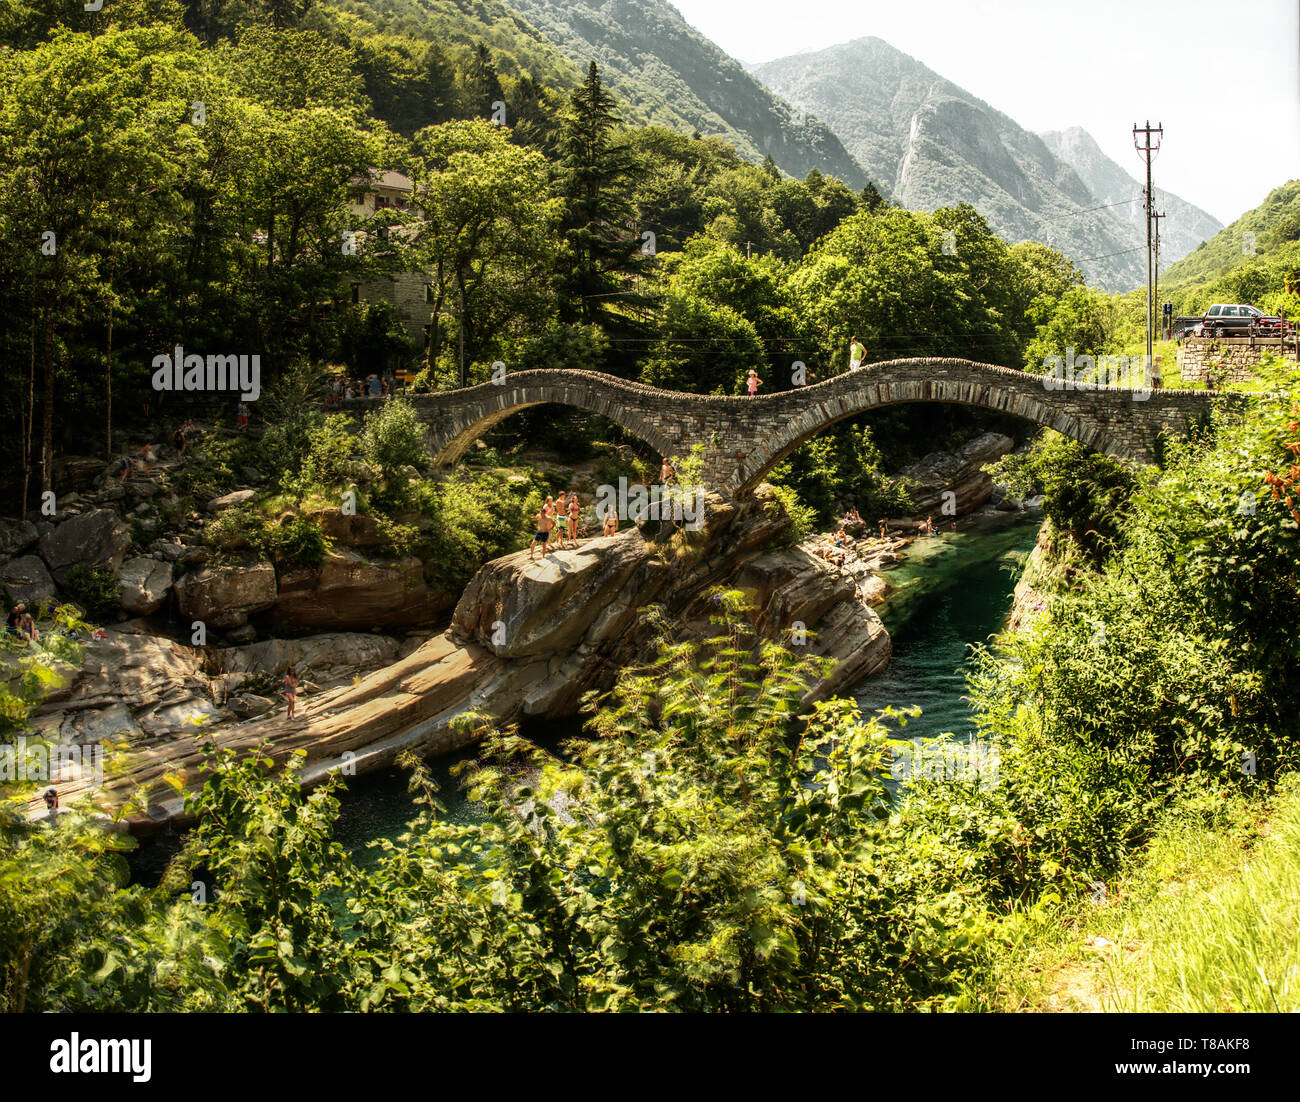 List 101+ Images ponte dei salti bridge in lavertezzo switzerland Full HD, 2k, 4k